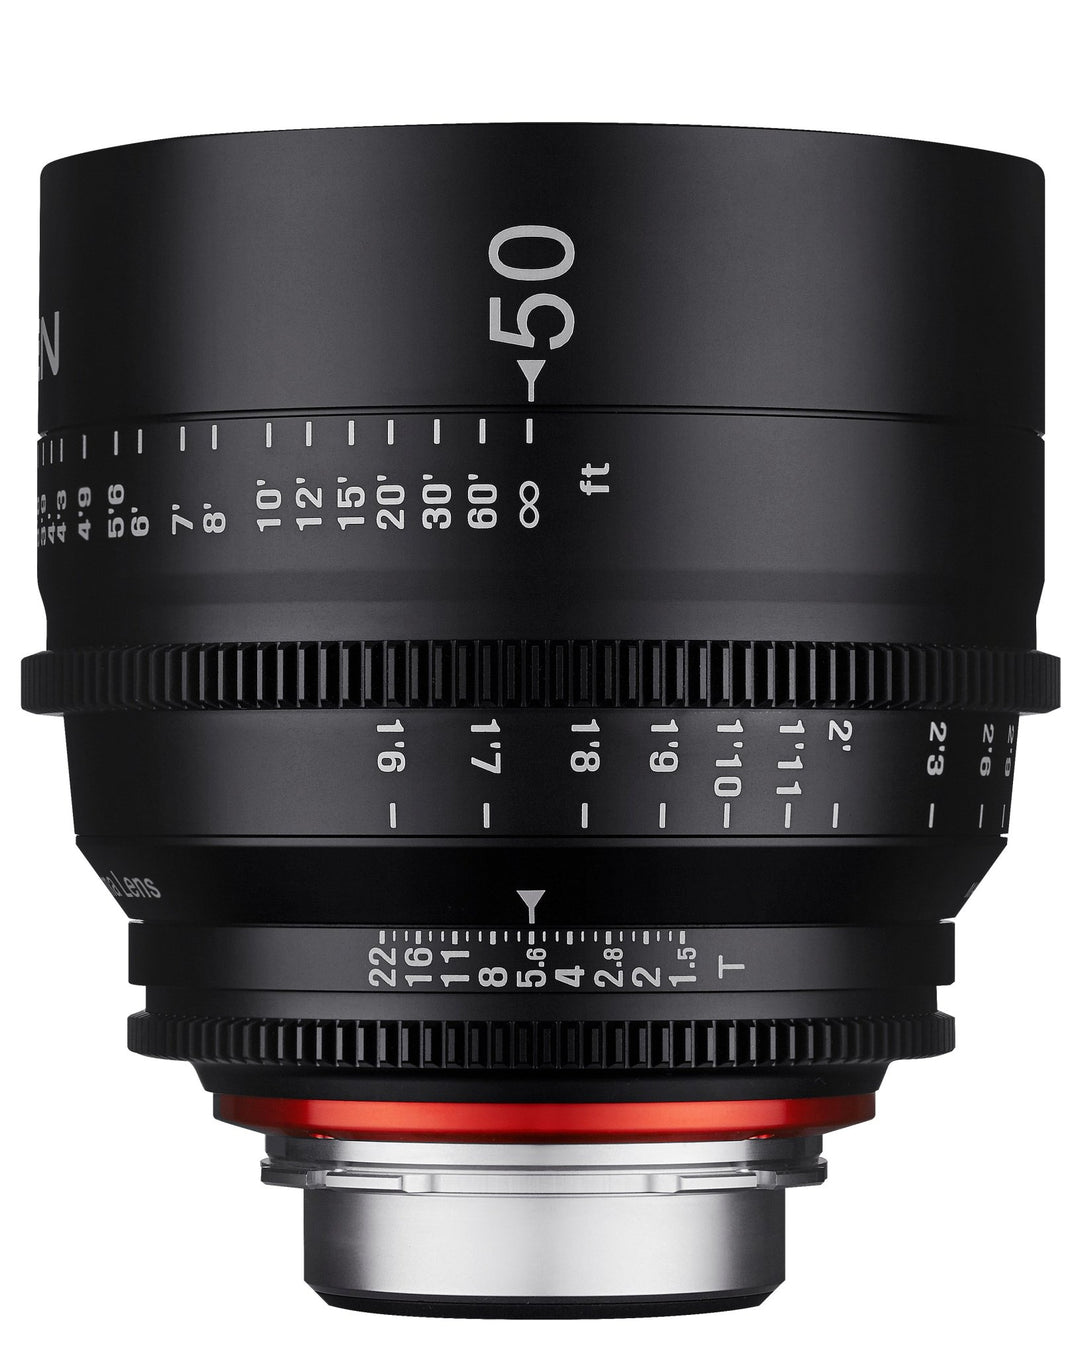 50mm T1.5 XEEN Pro Cinema Lens - Rokinon